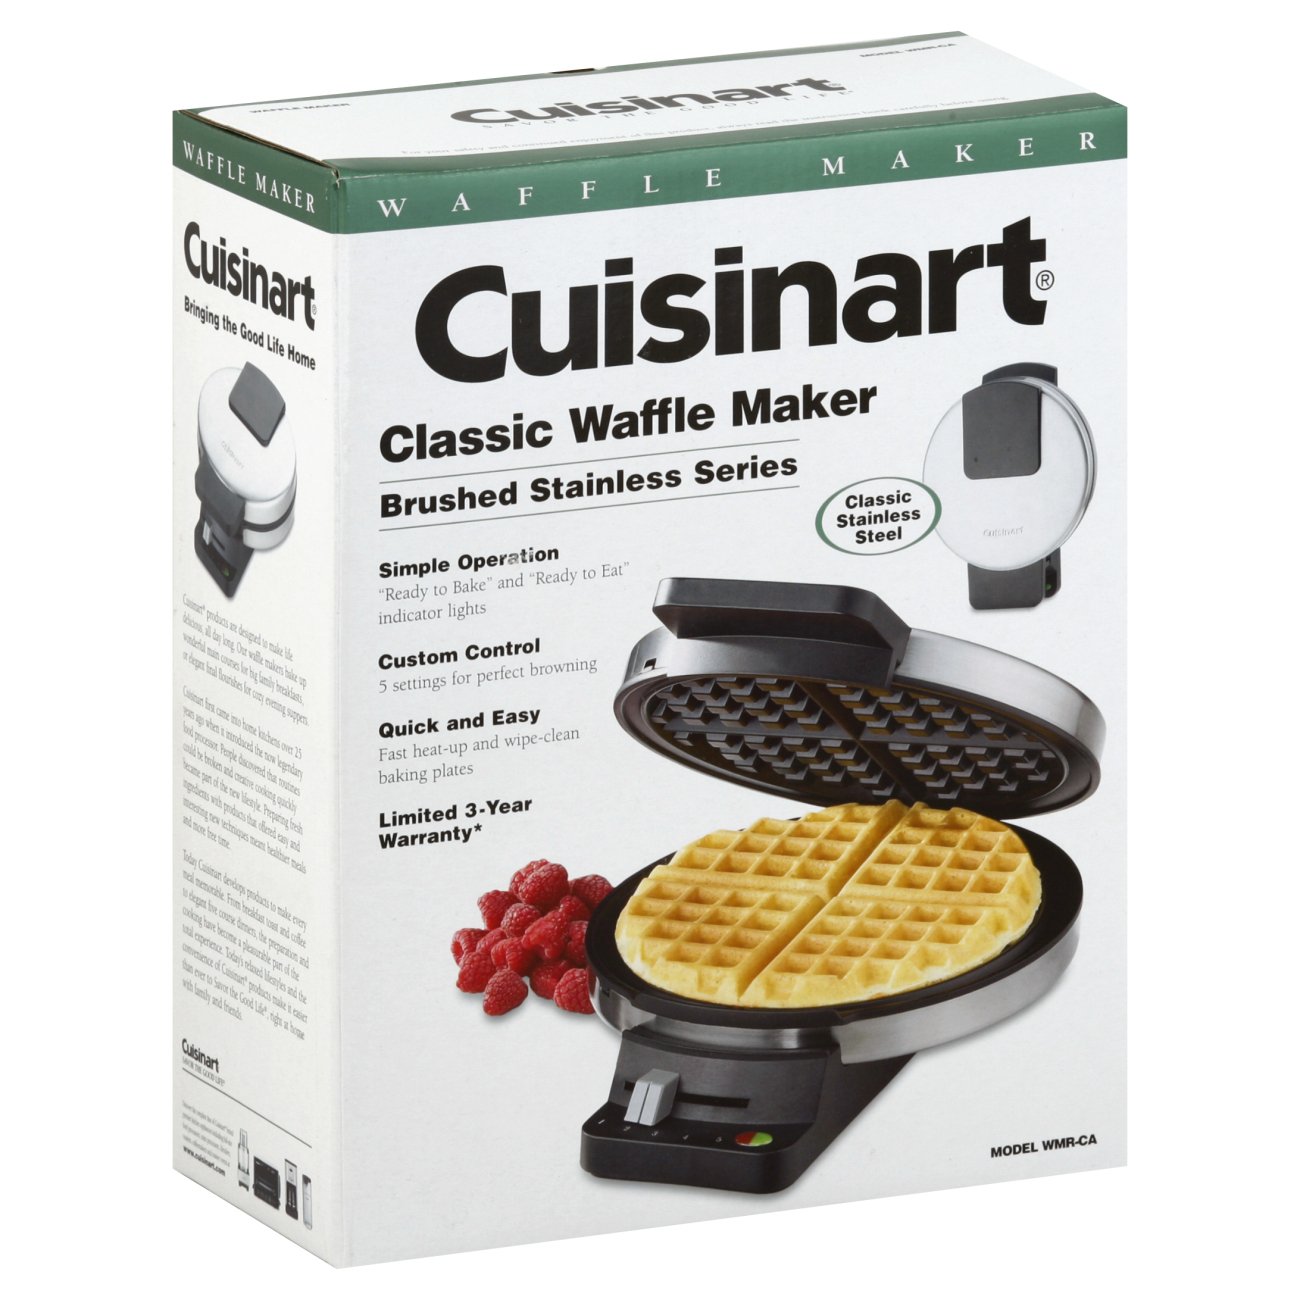 Cuisinart WMR-CA Classic Waffle Maker In-depth Review